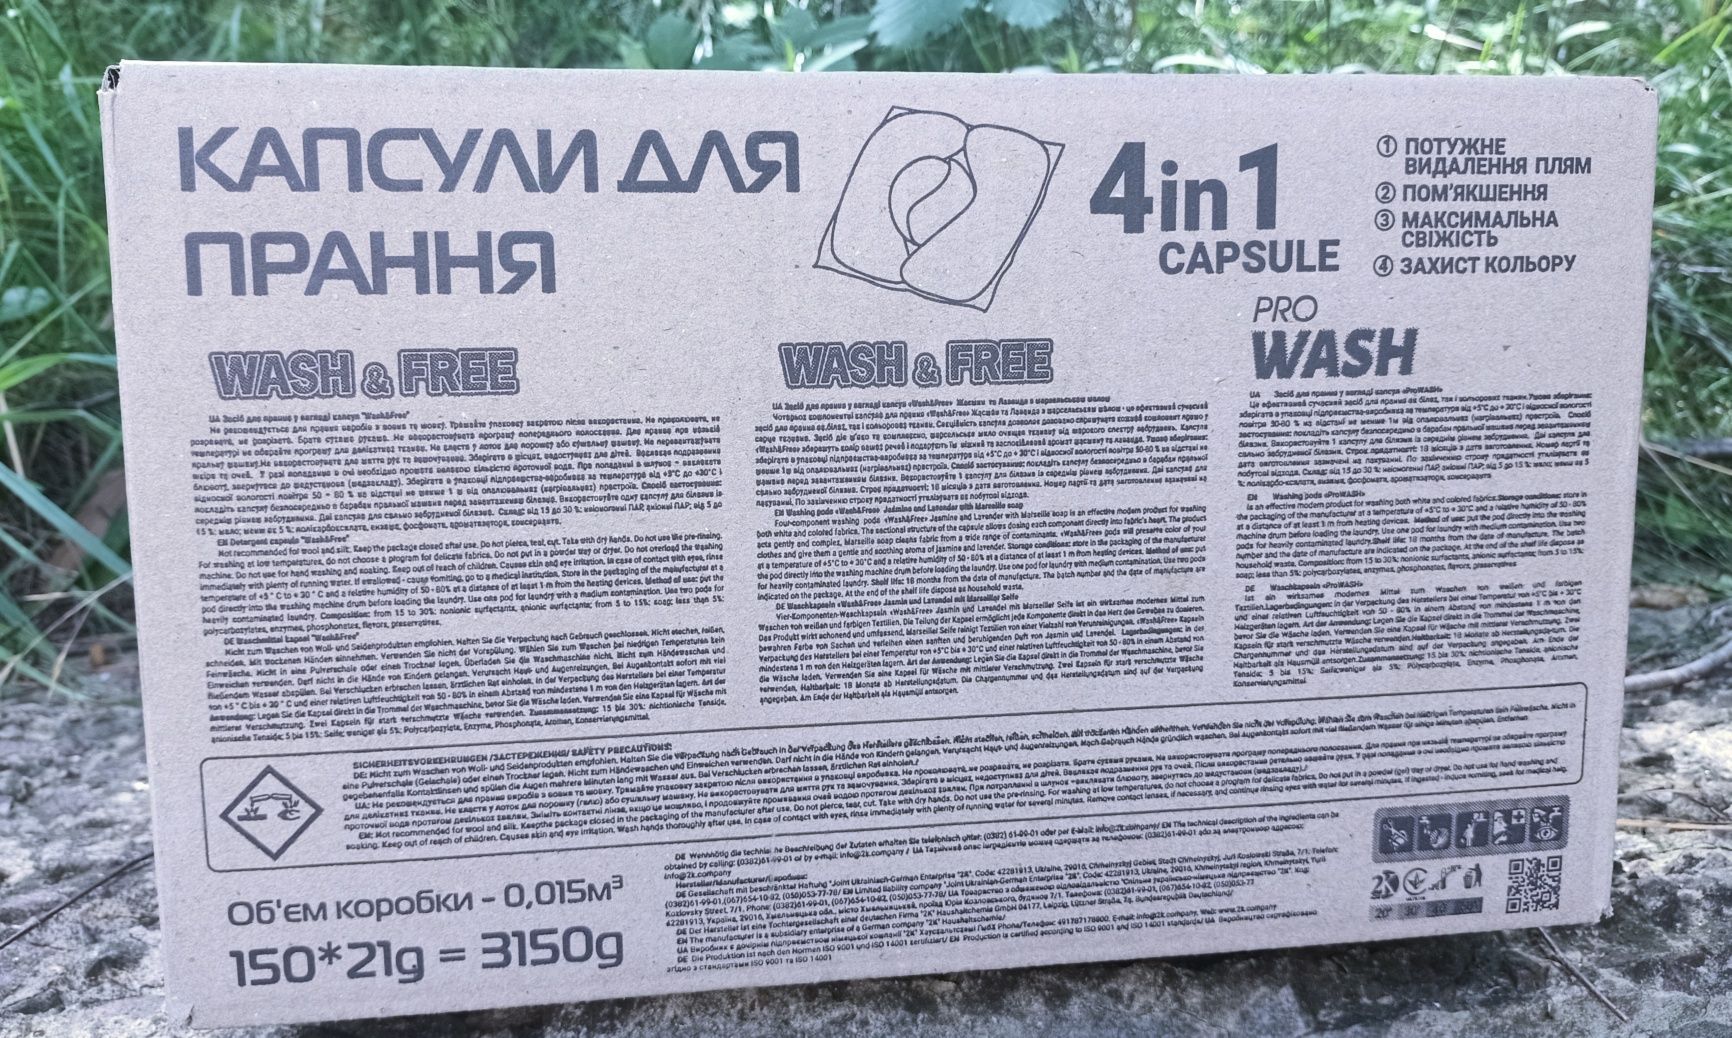 Капсули "Wash&Free" для прання капсулы для стирки 6.00 грн.